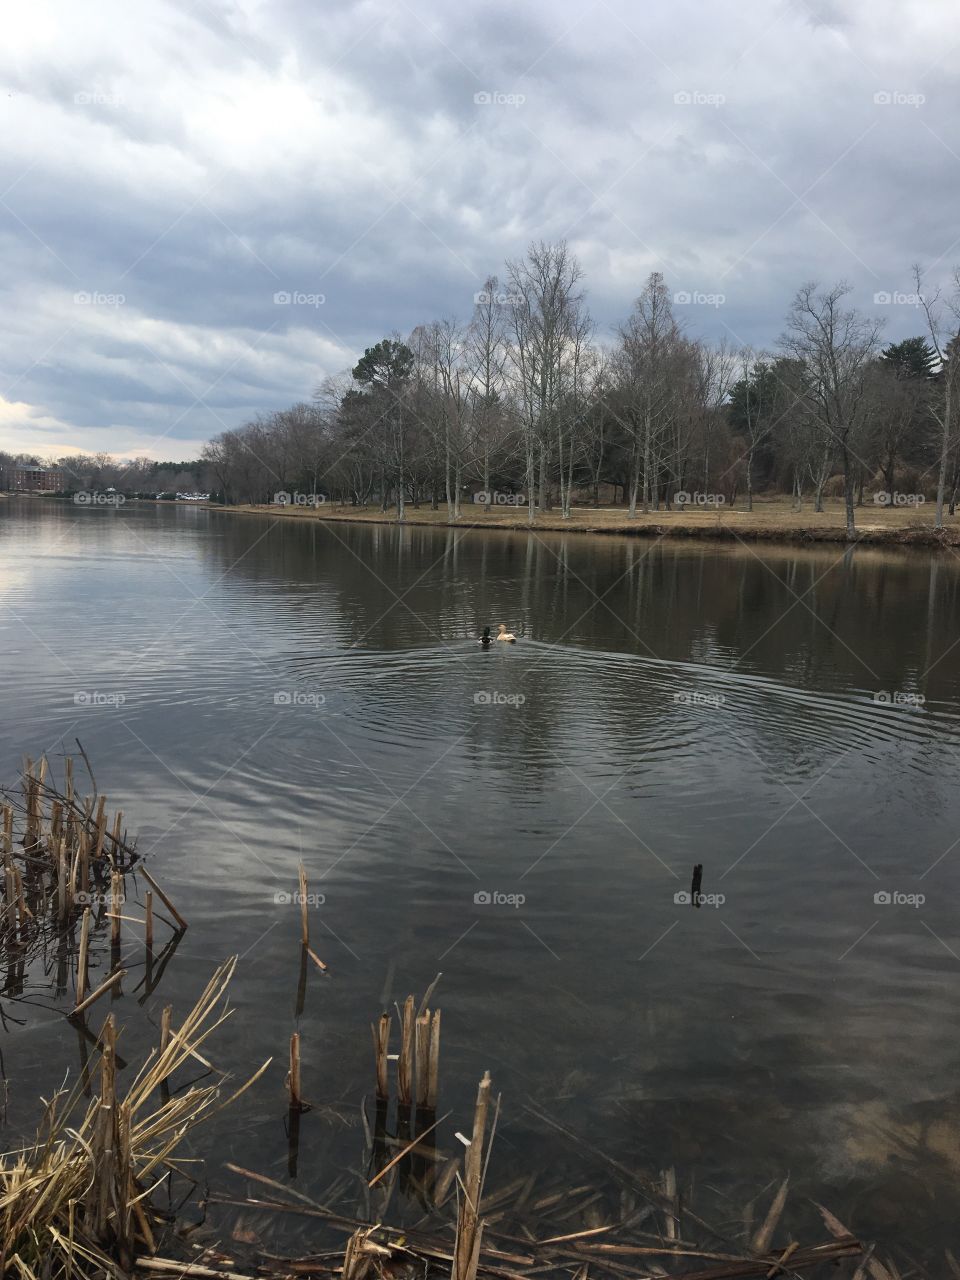 Ducks swimming in lake 